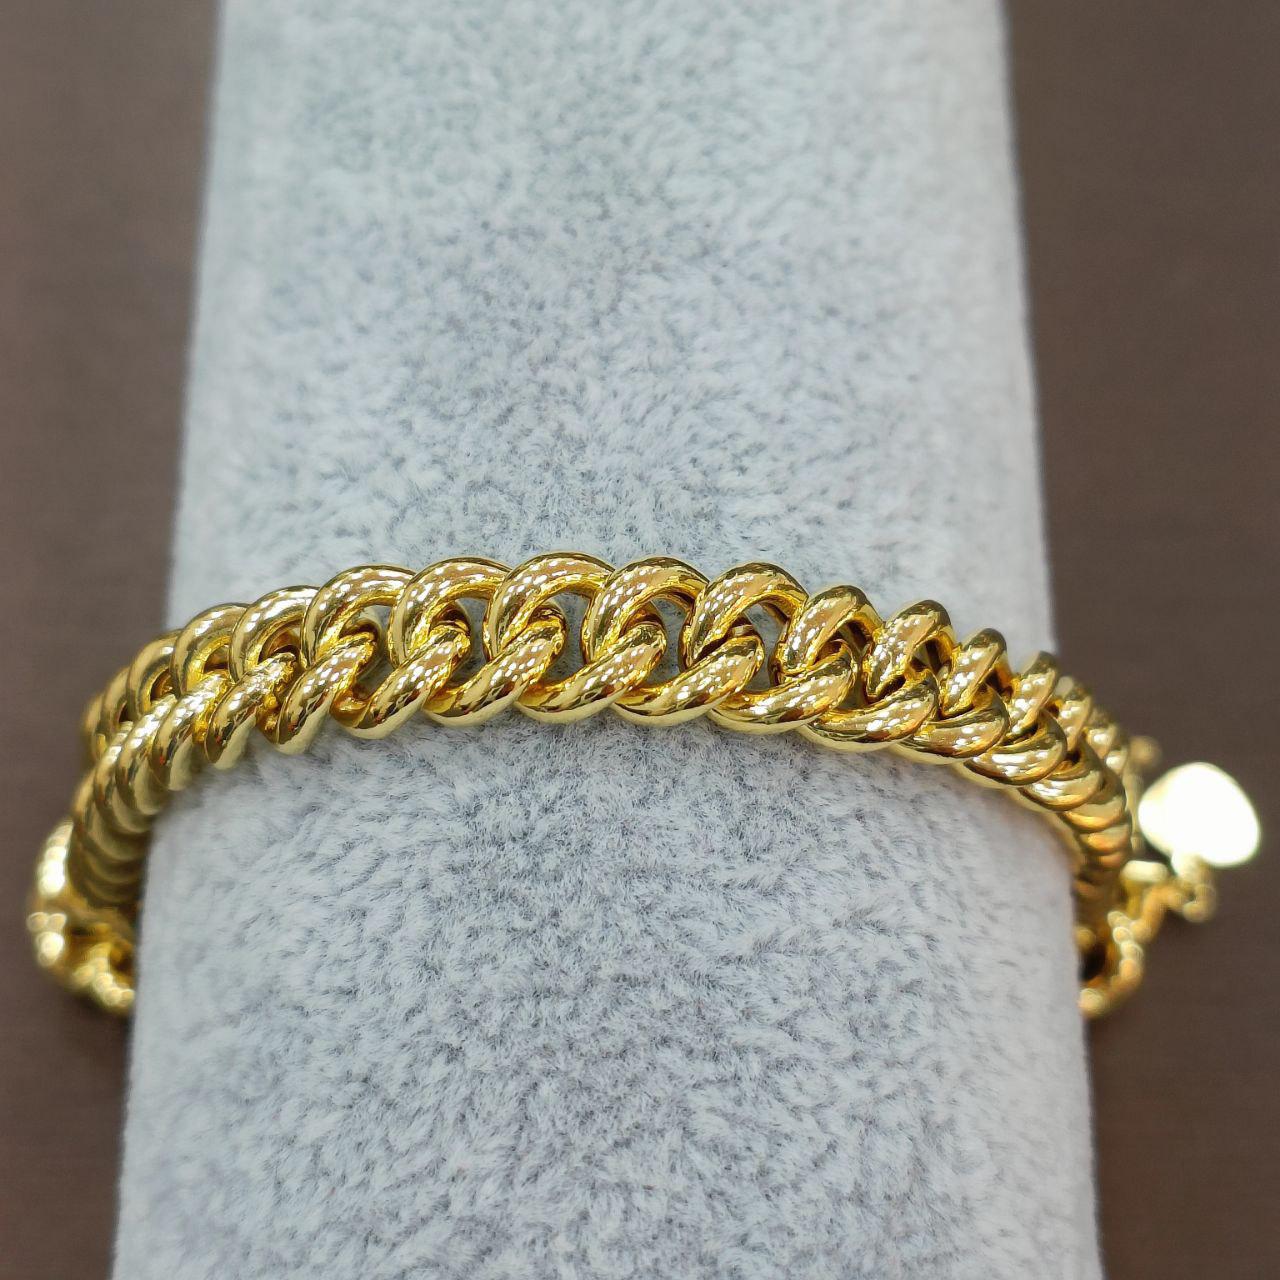 22k / 916 gold hollow Fish bone Bracelet by Best Gold Shop-Bracelets-Best Gold Shop